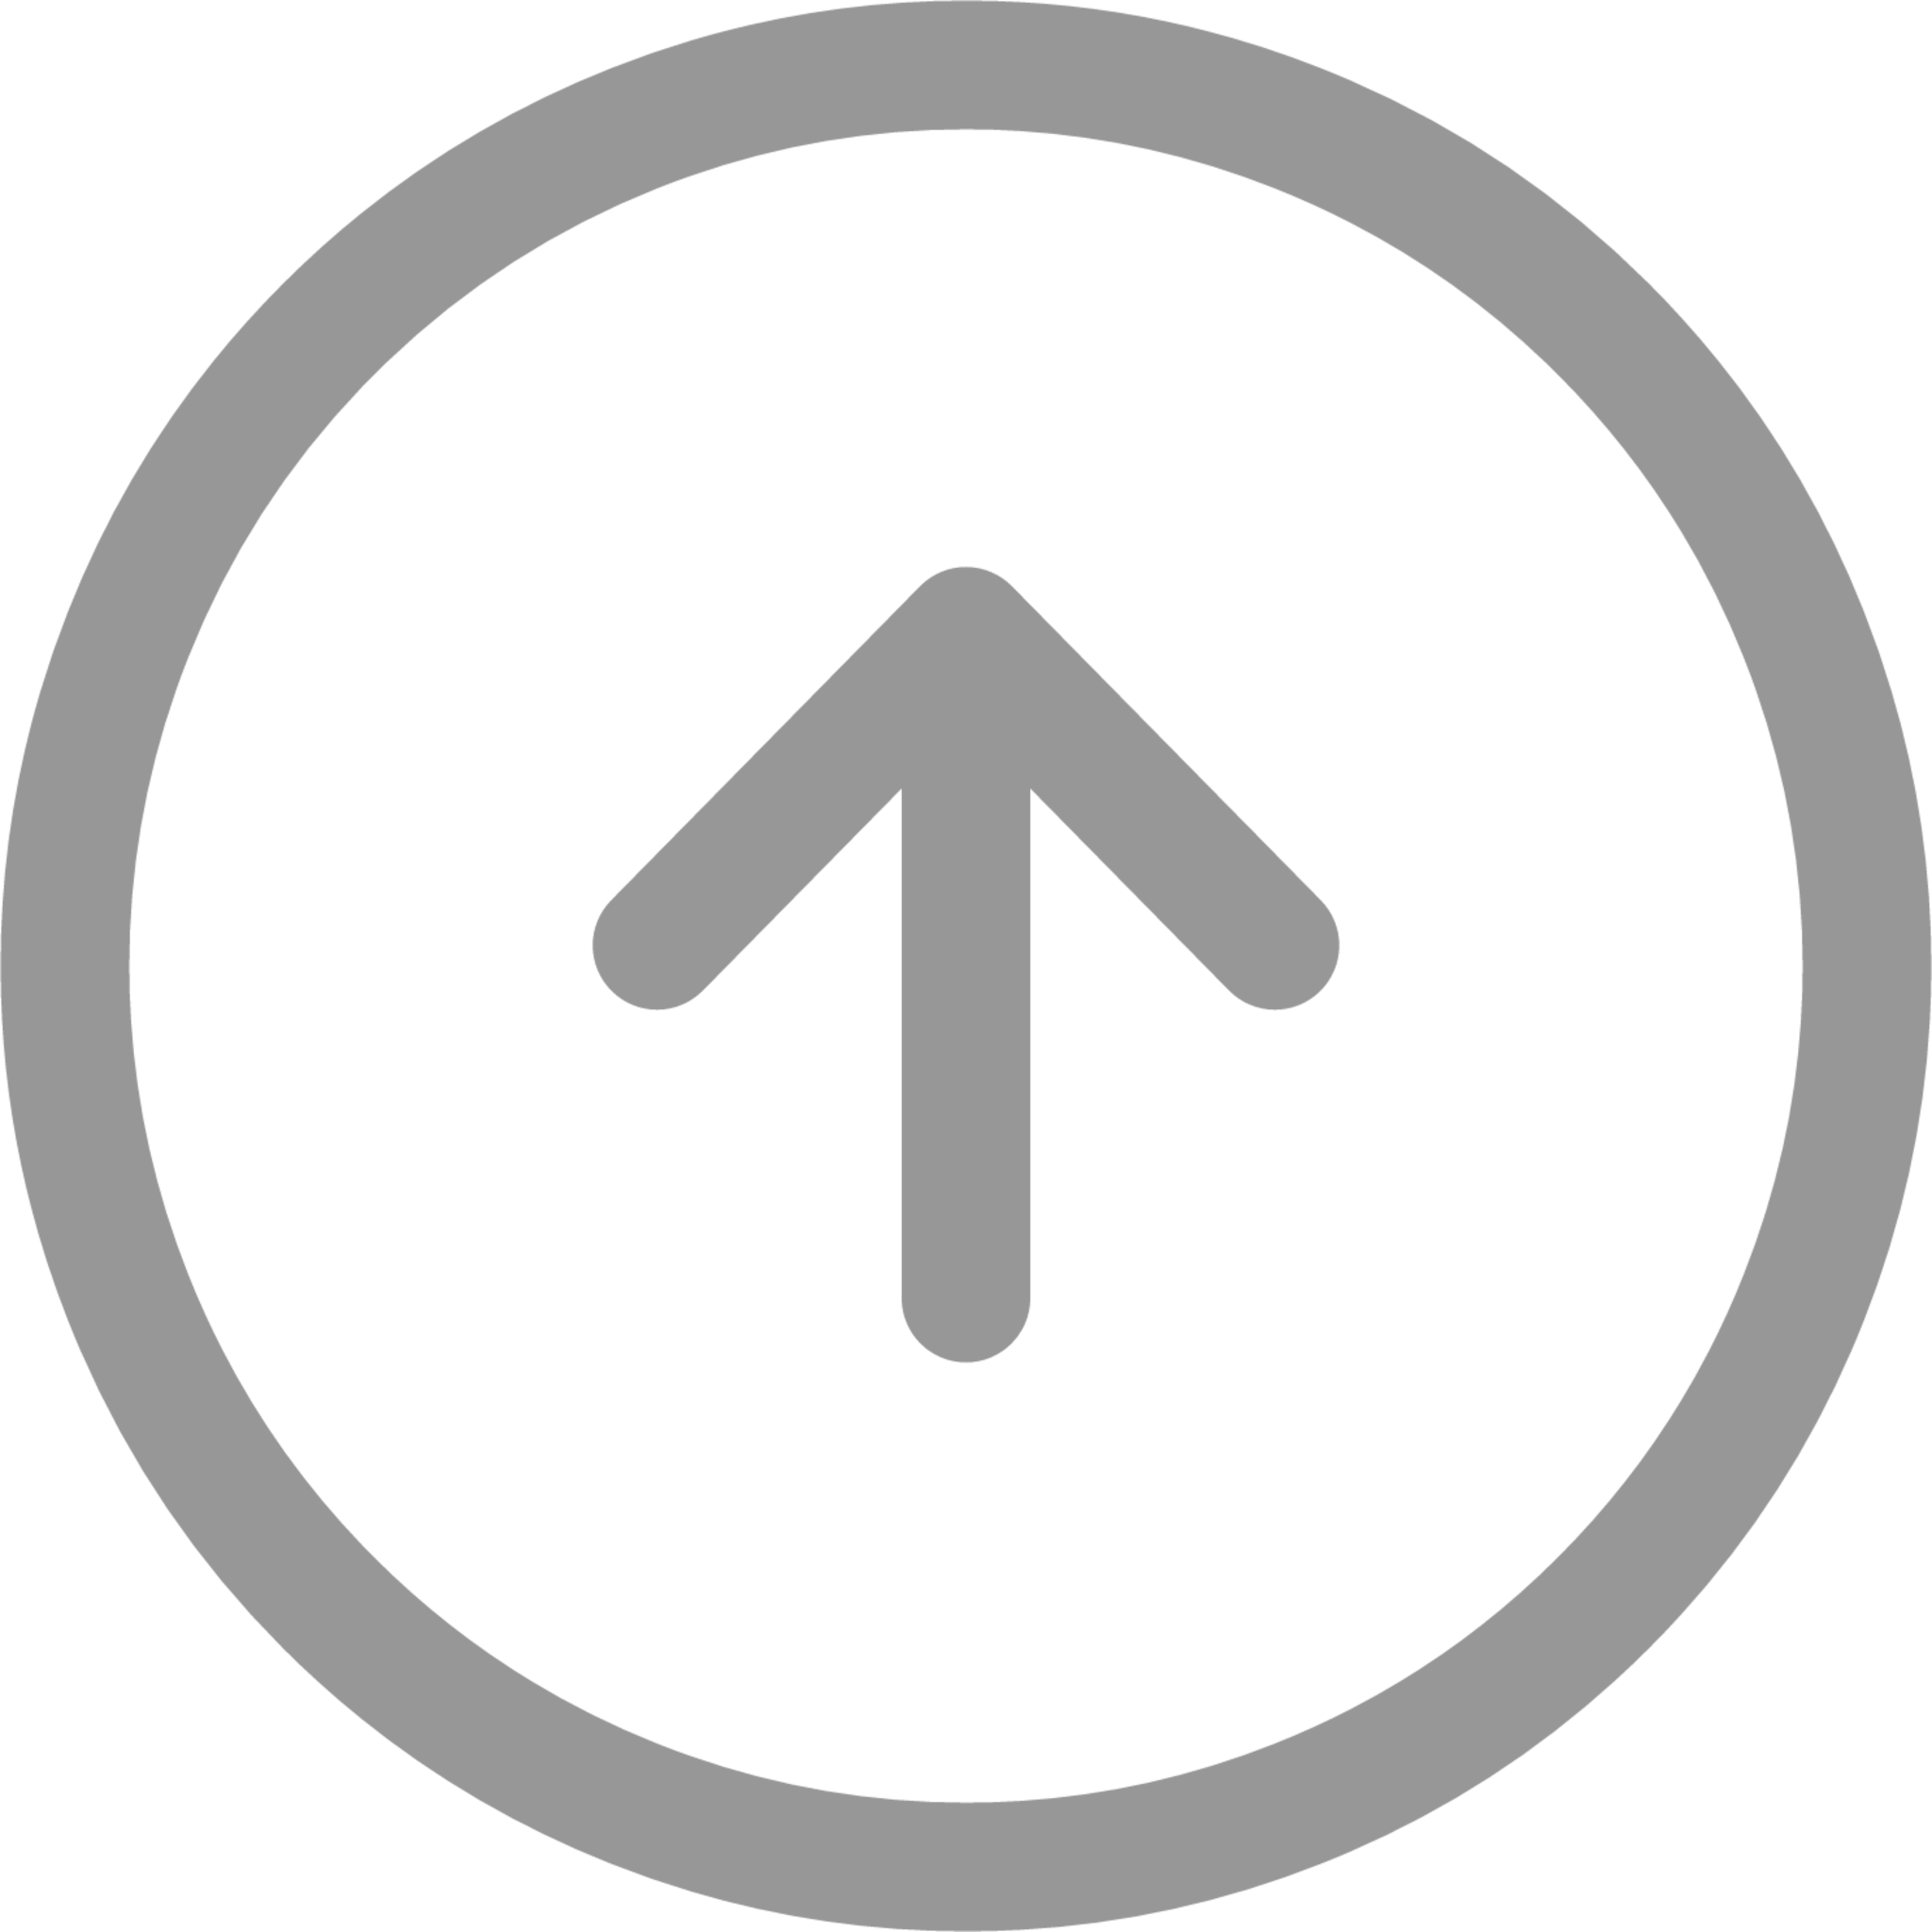 arrowTopCircle icon